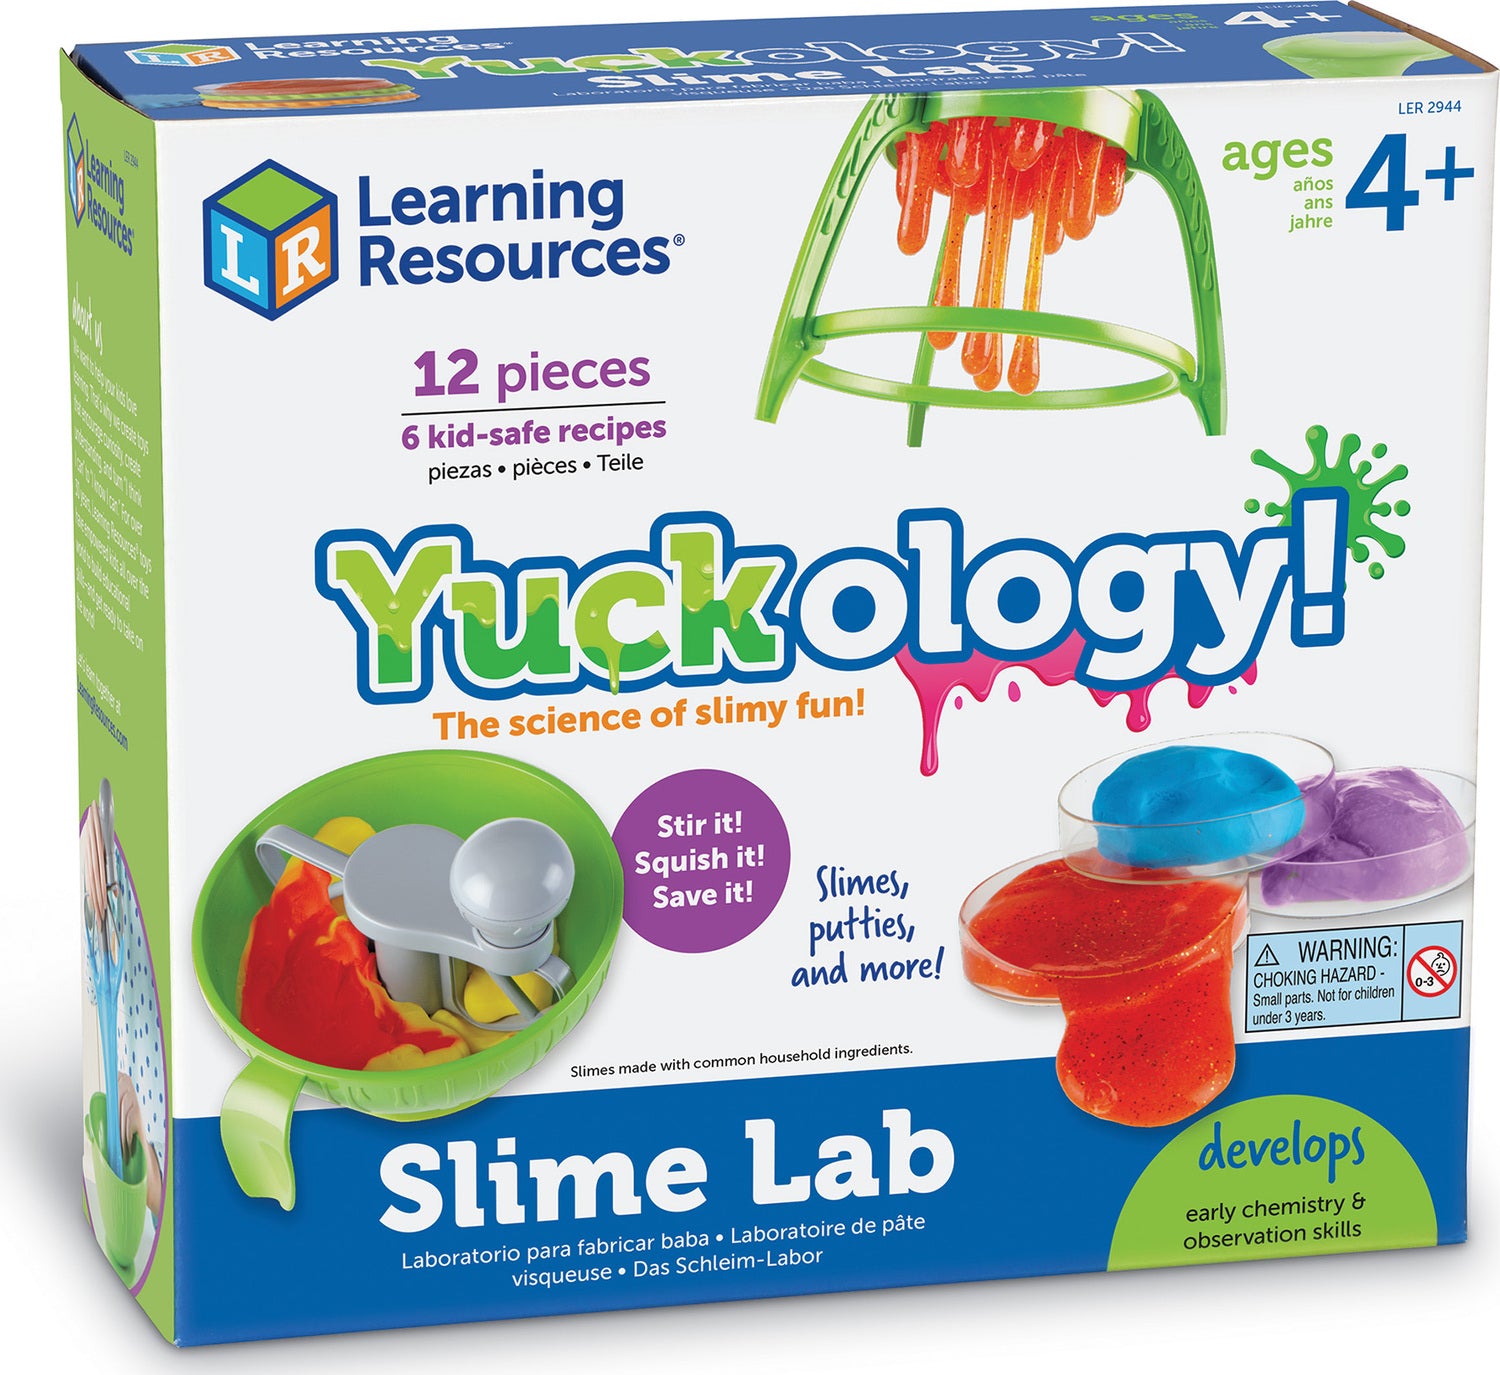 Yuckology! Slime Lab